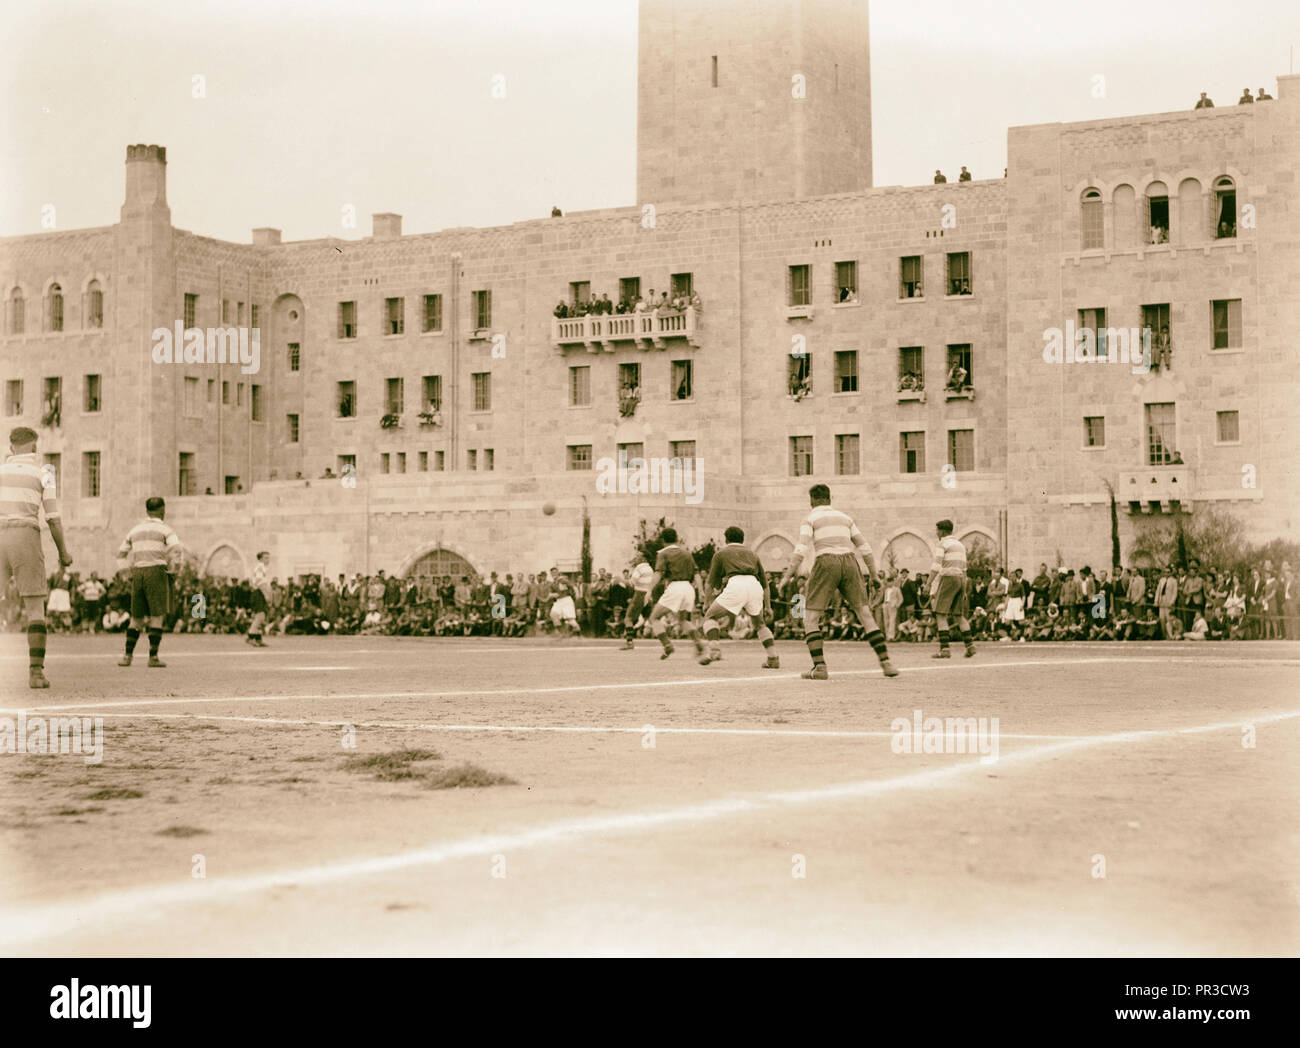 Football game 'Y' versus British Army. The game in progress, 'Y' building in gackground, Jerusalem, Israel Stock Photo